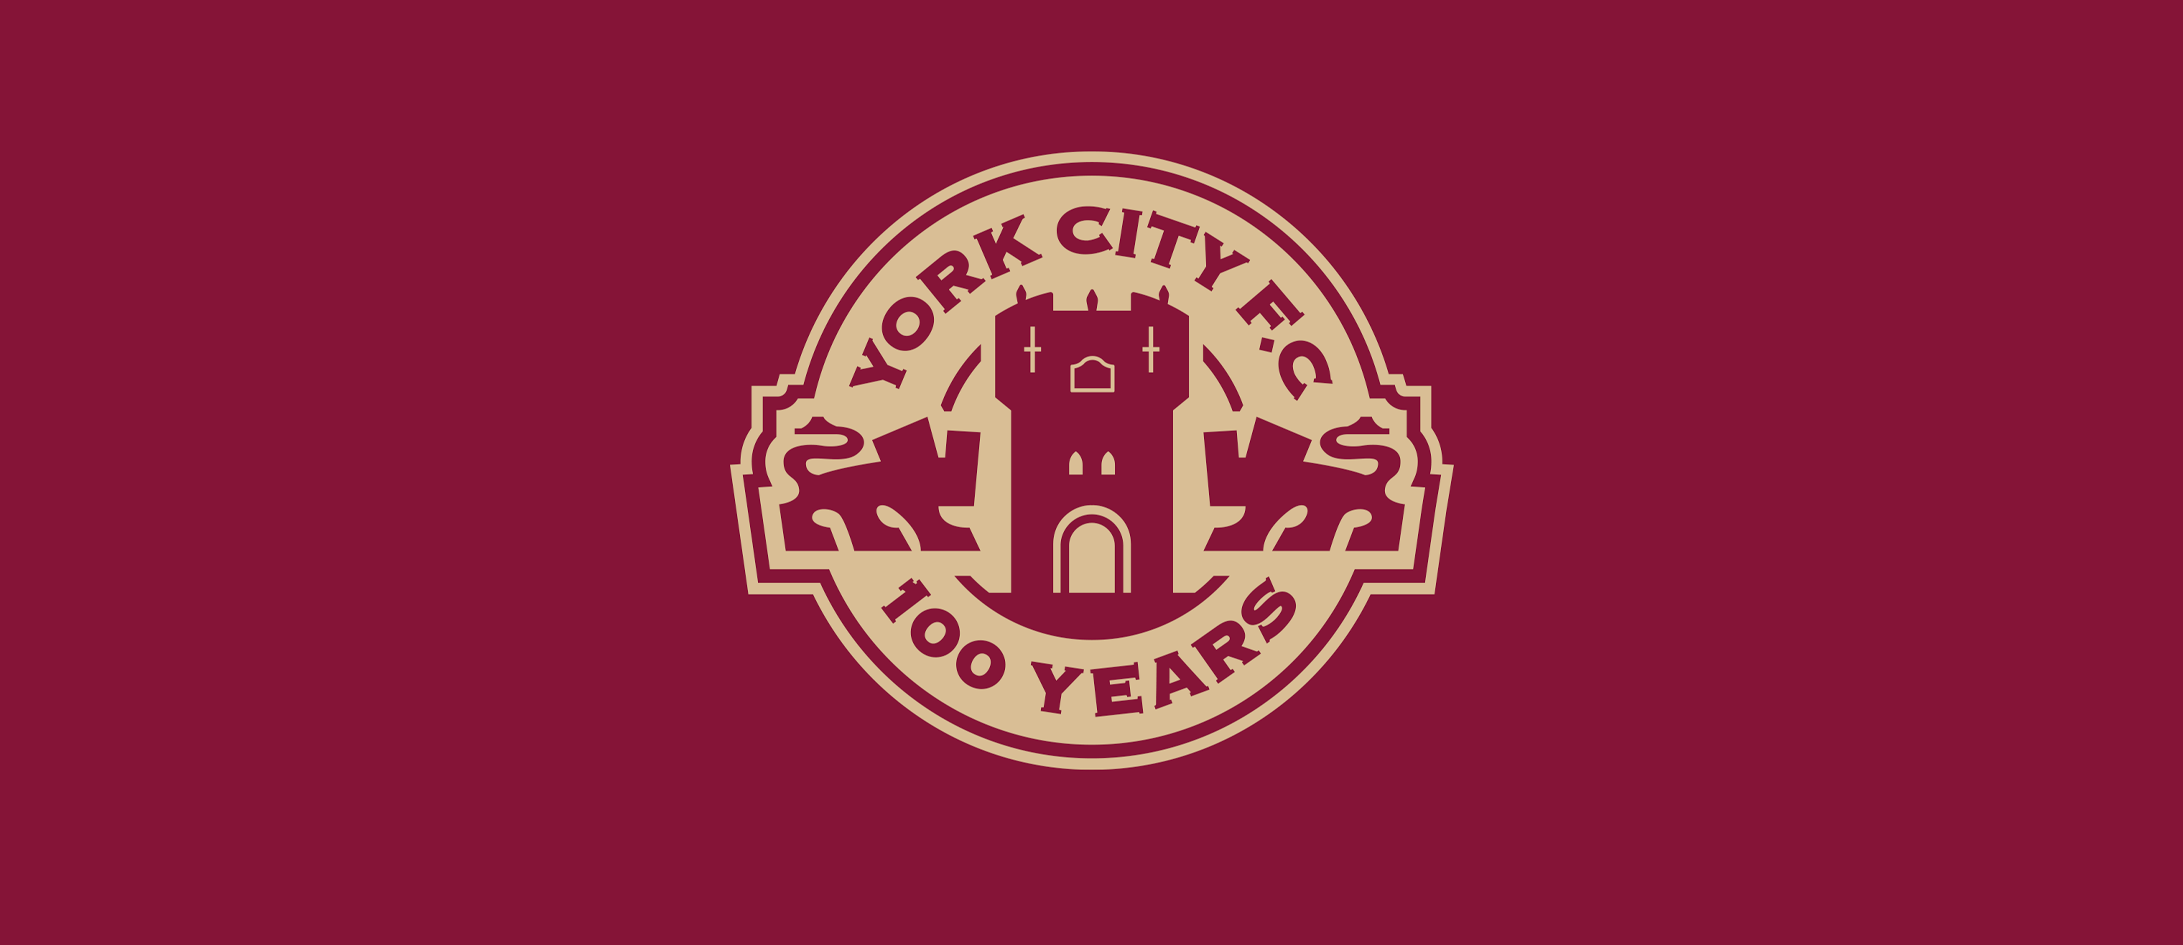 York City Football Club